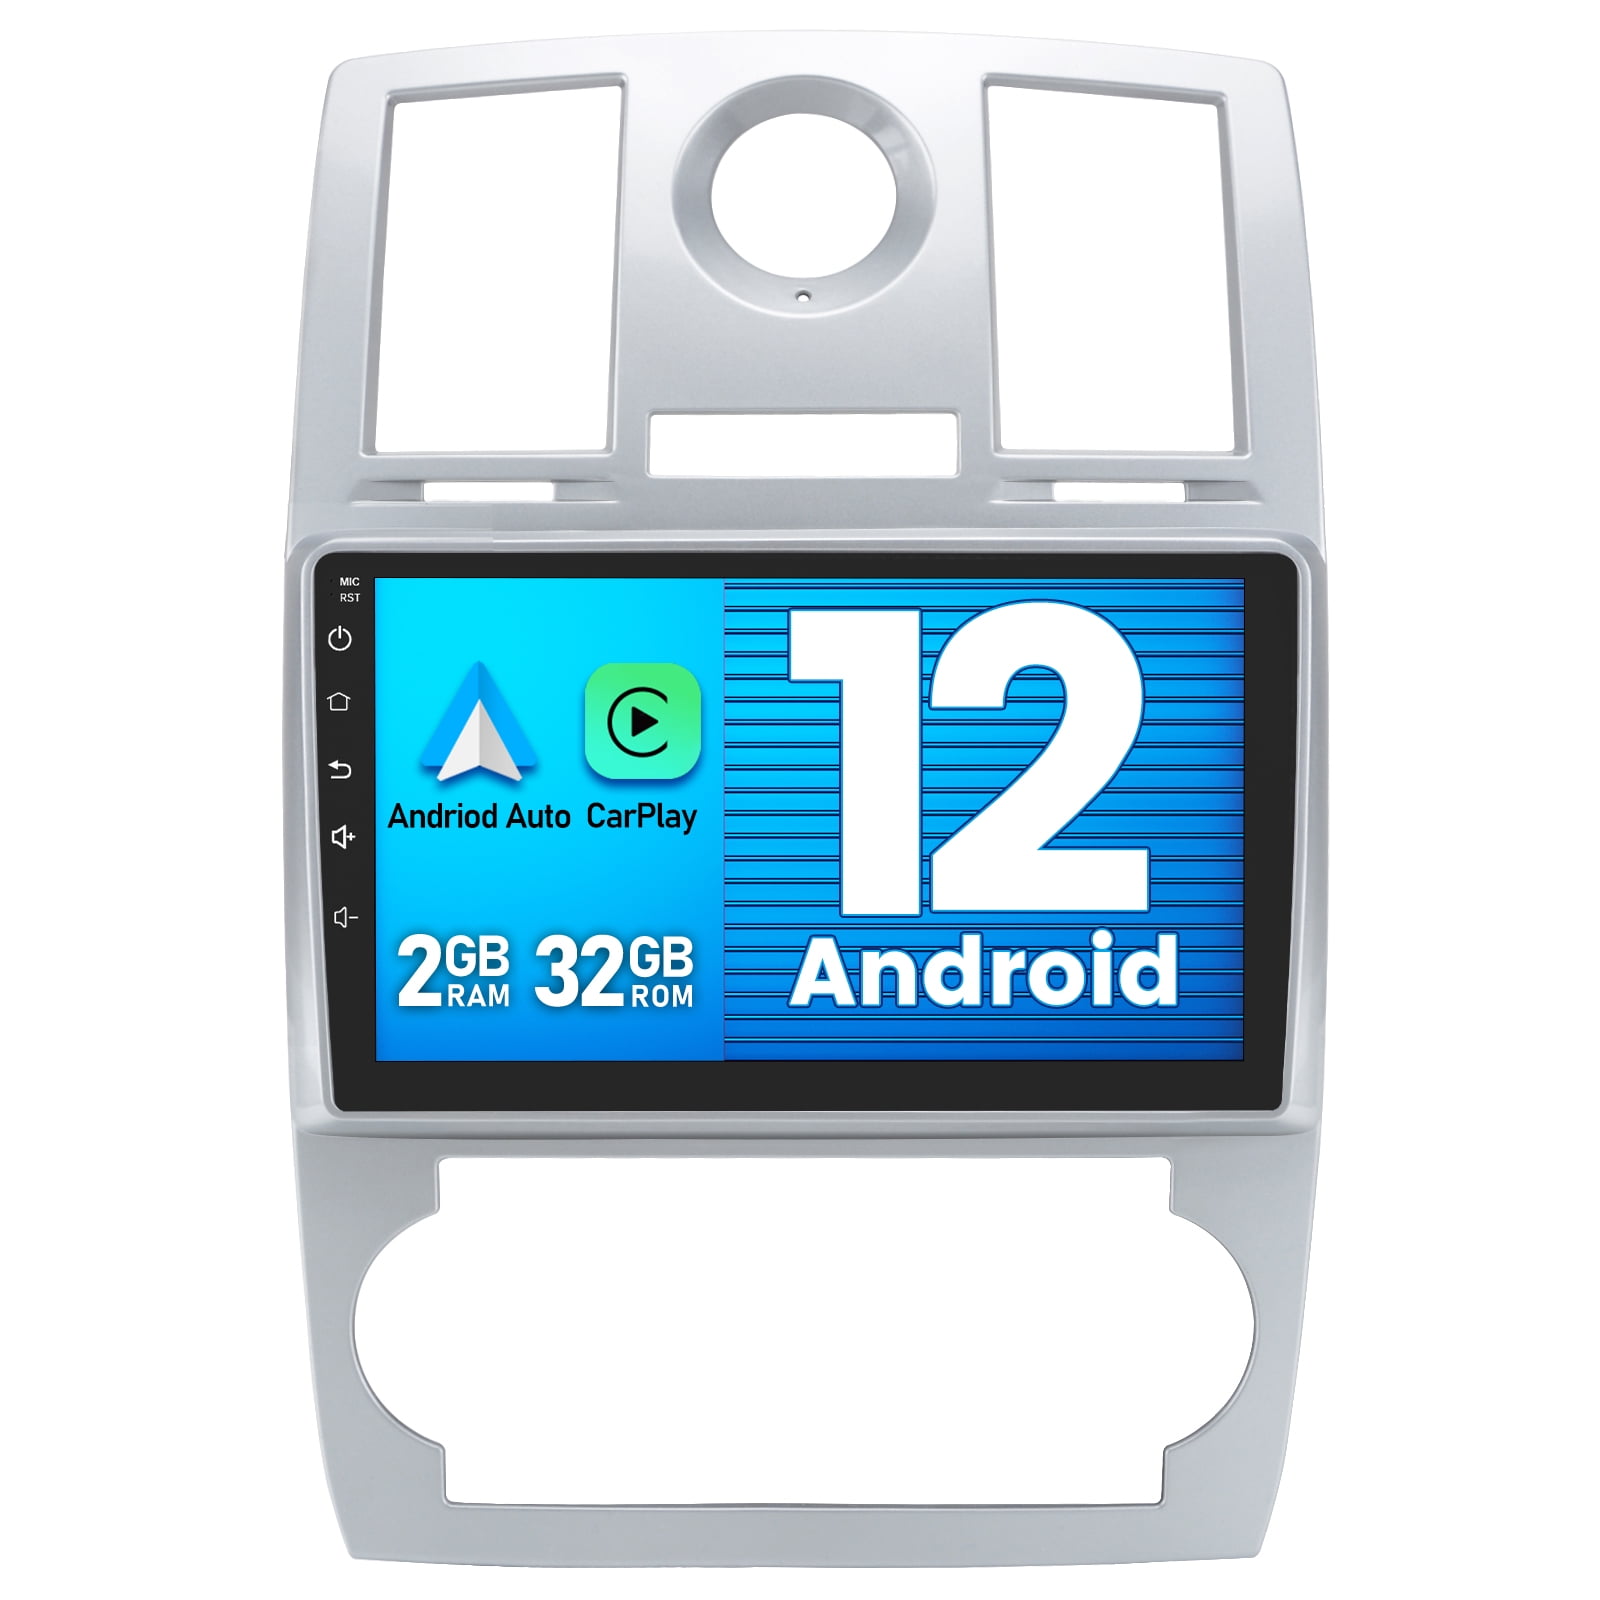 9 Android 2GB RAM+32GB ROM Autoradio Navigation GPS for Chrysler 300